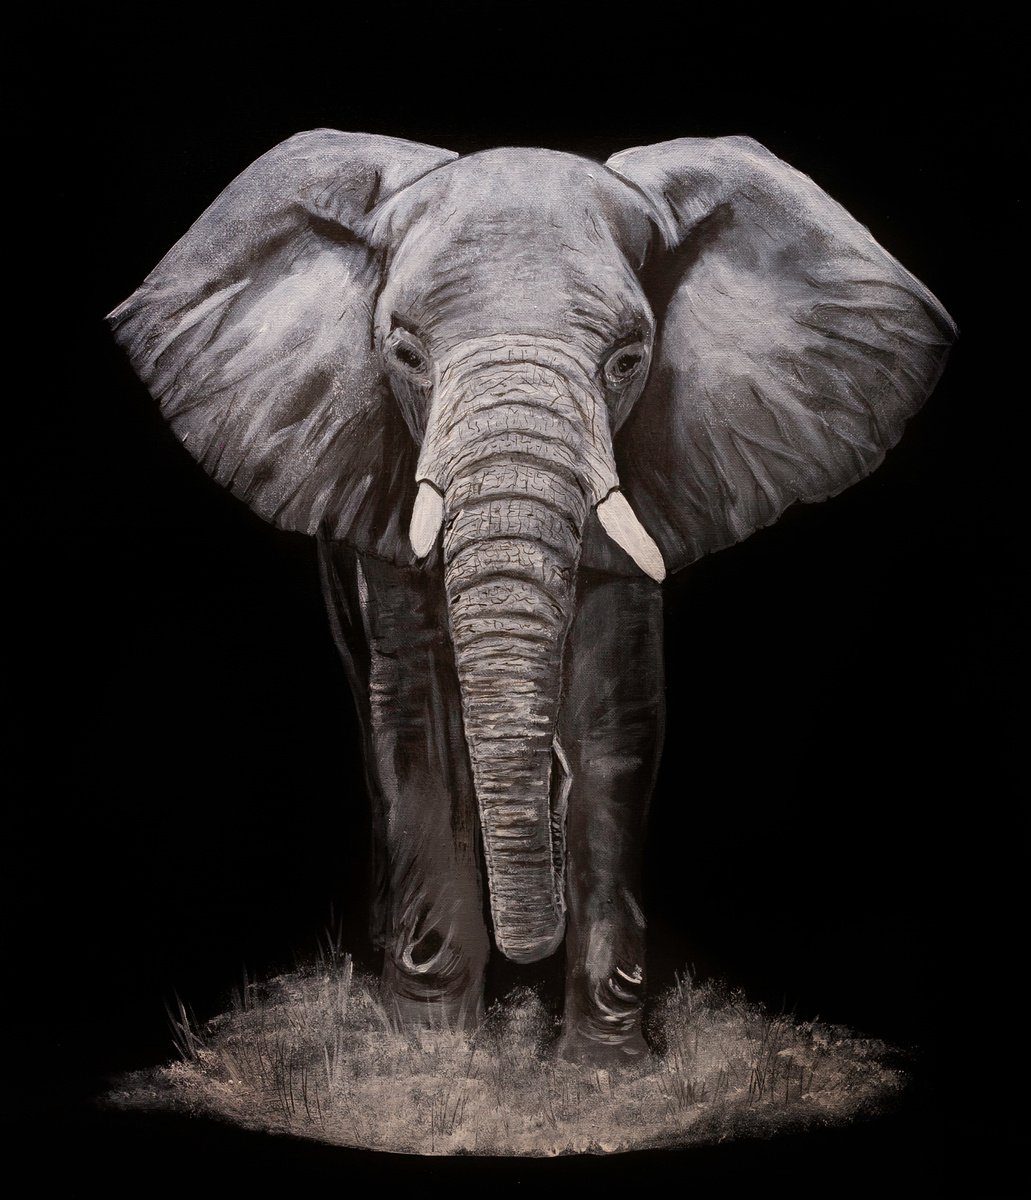 Elephant by Margarita Telianidis